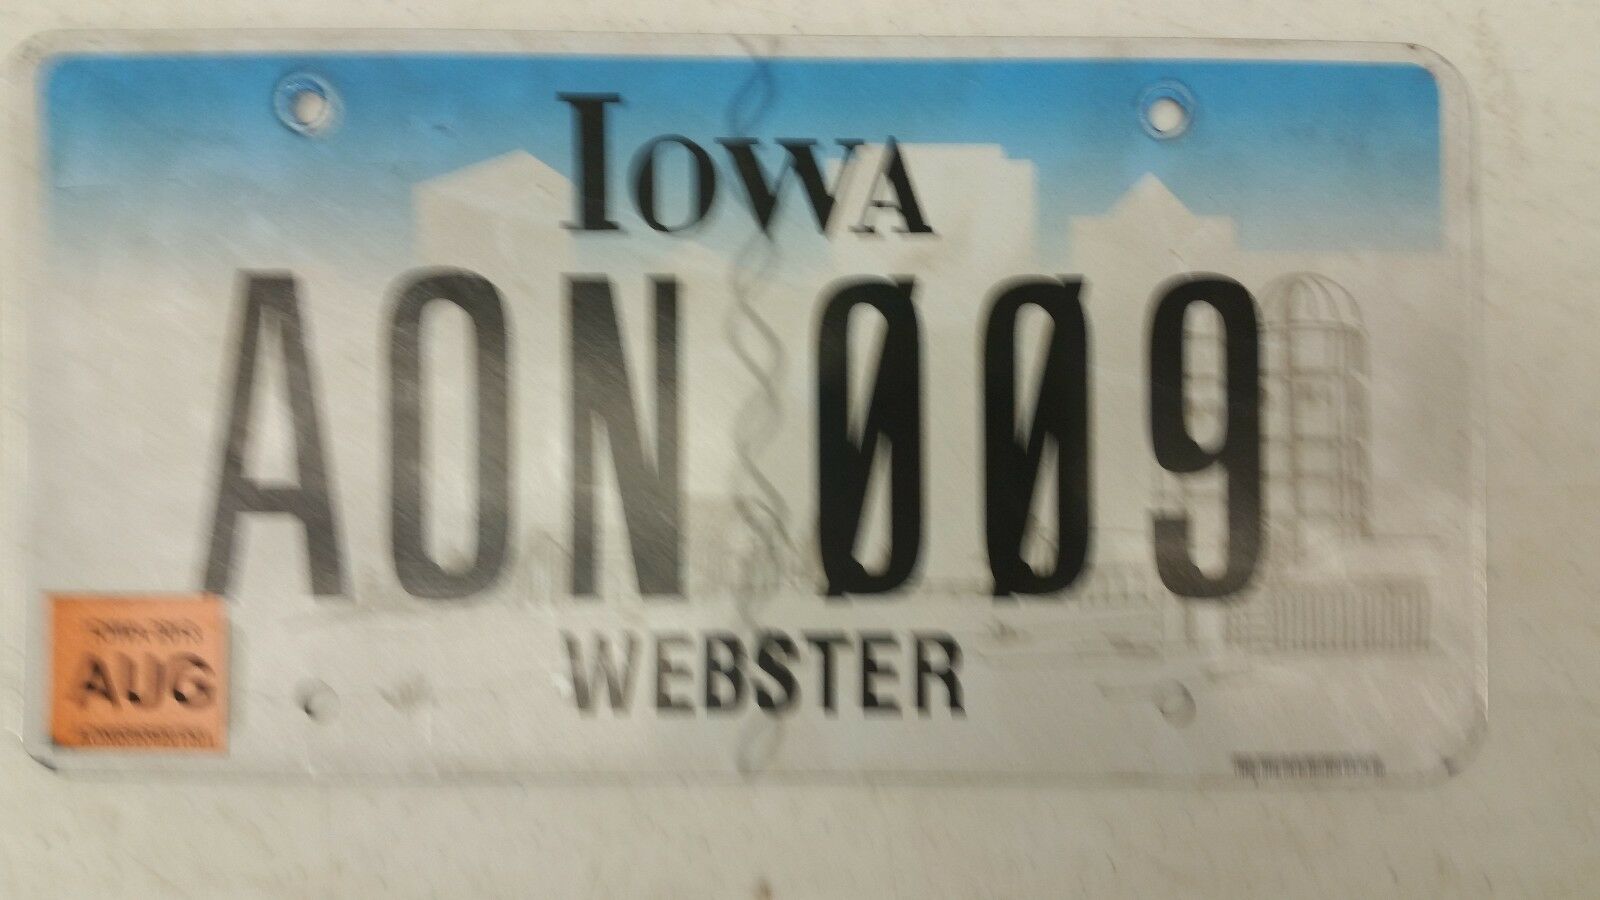 2013 Iowa Webster County Radio License Plate Aon ØØ9